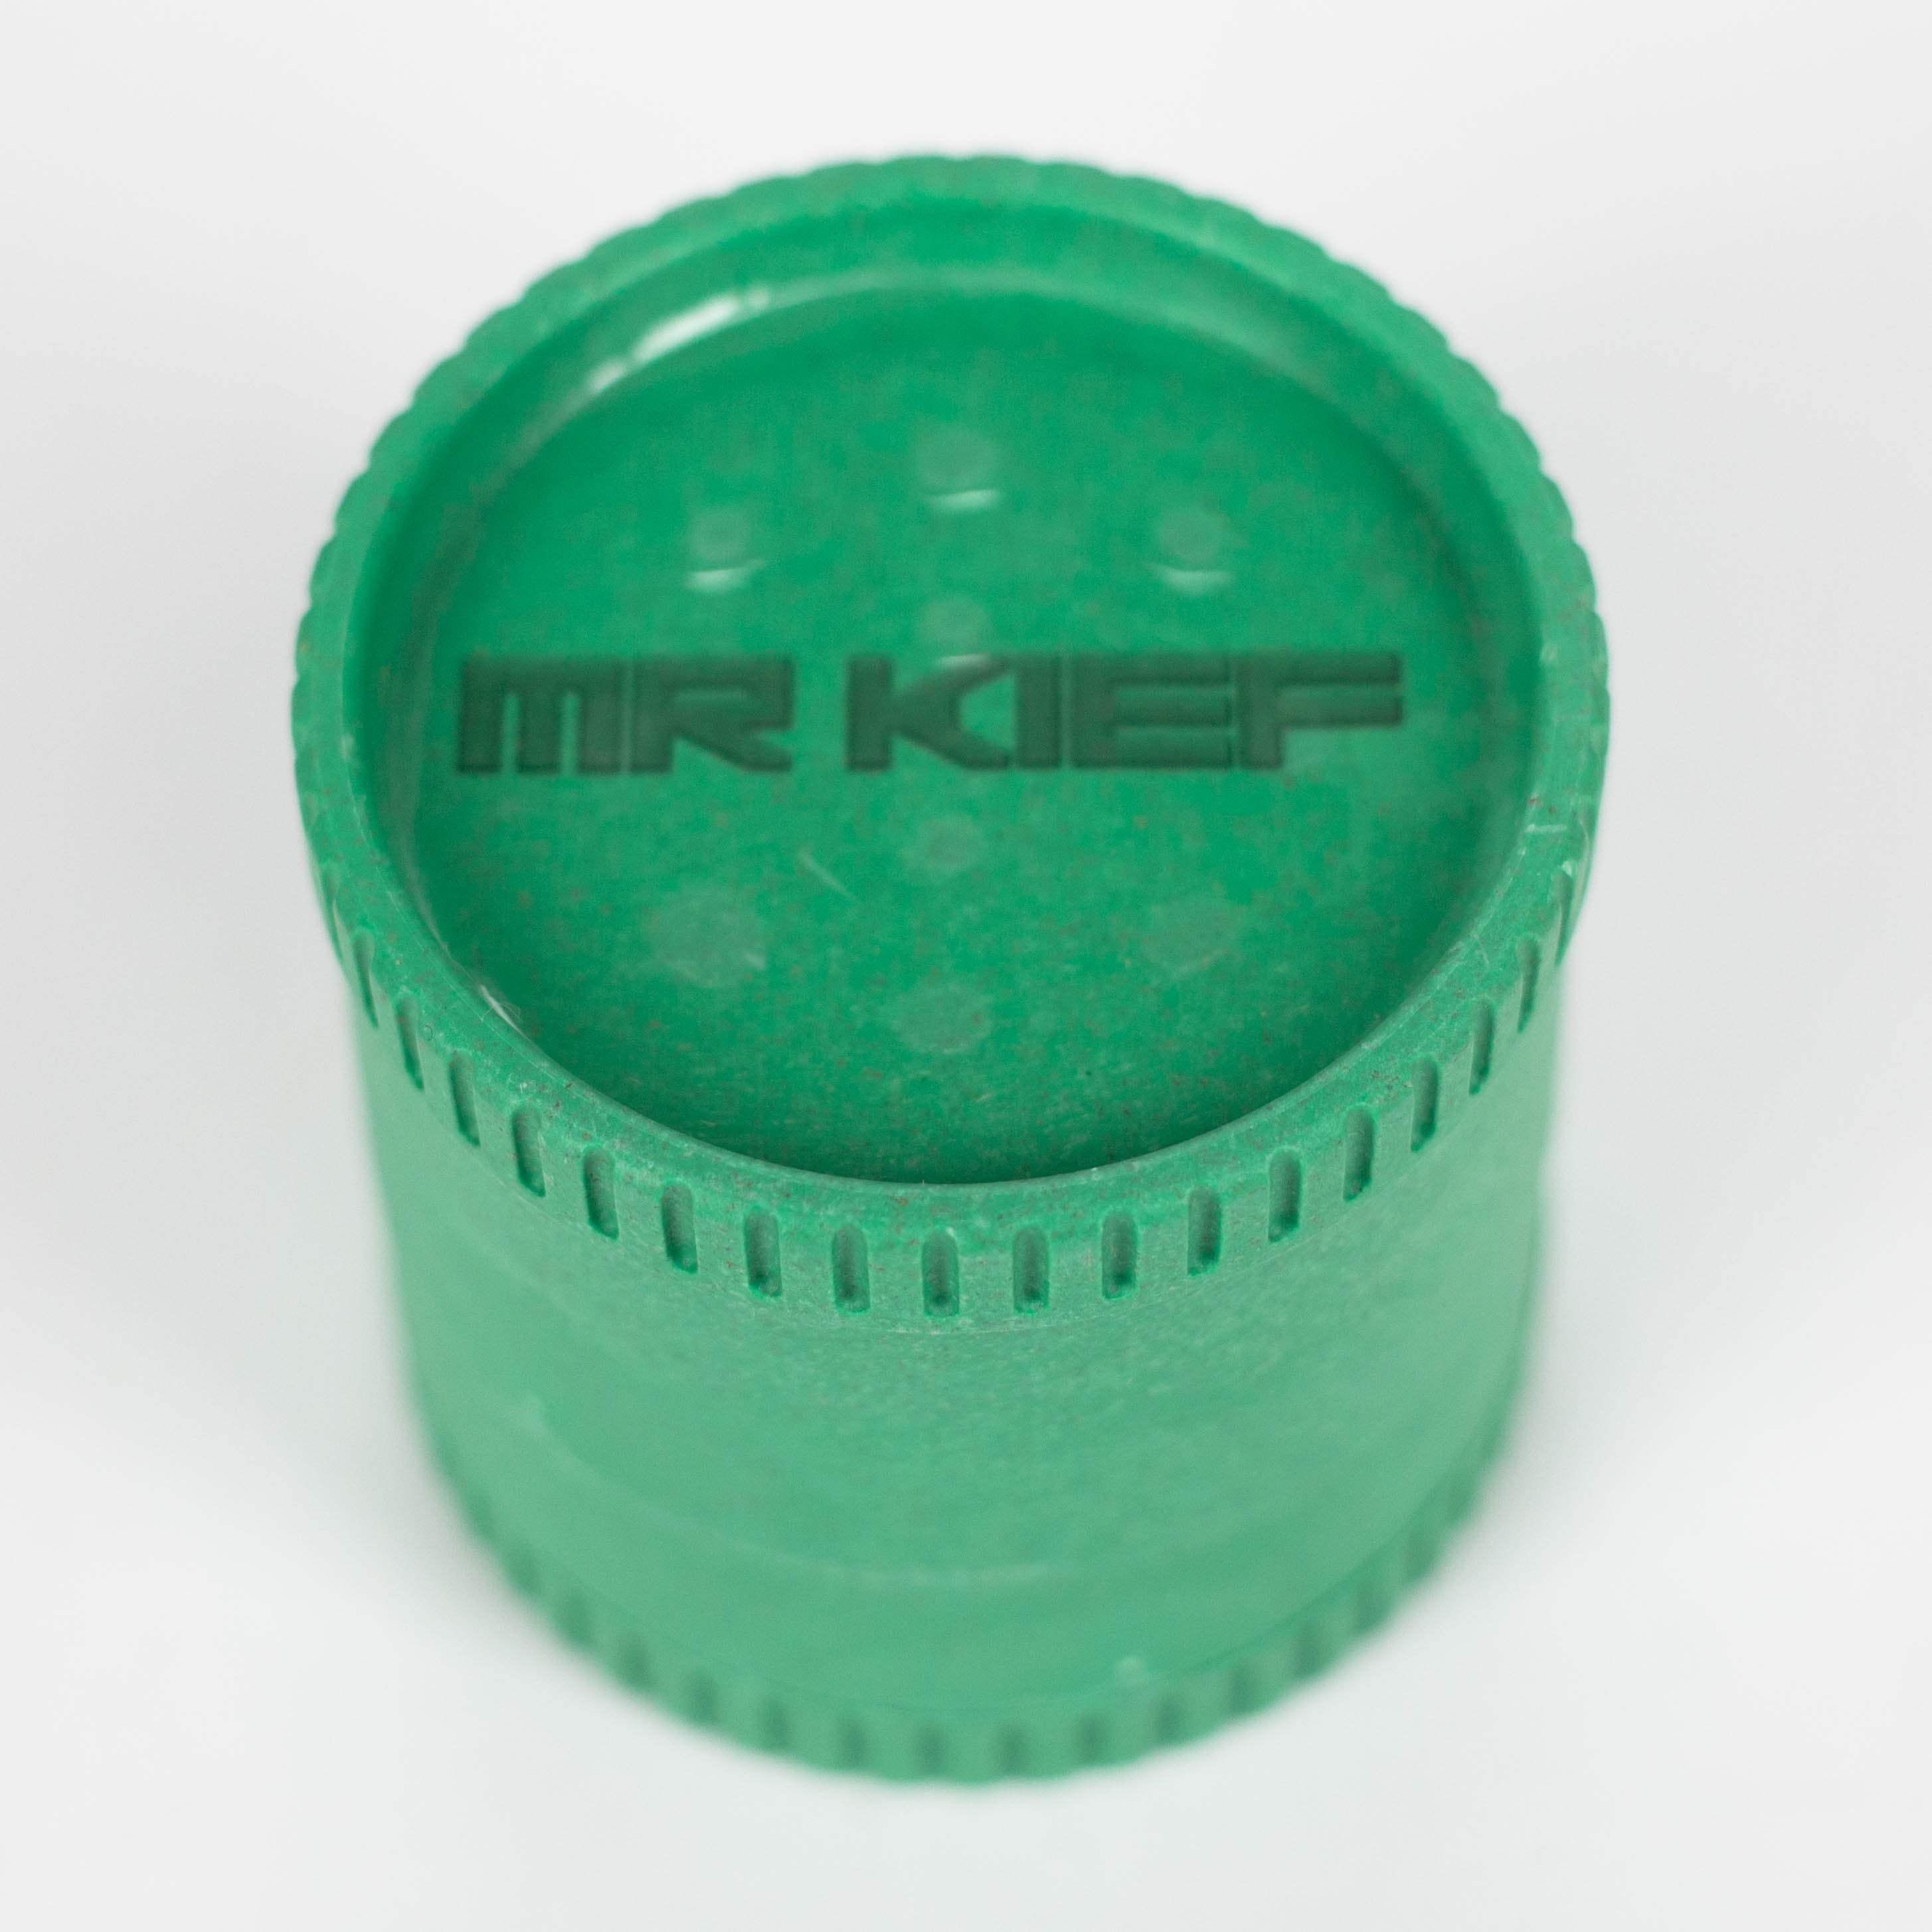 Mr. Kief | Biodegradable Hemp Grinder_5